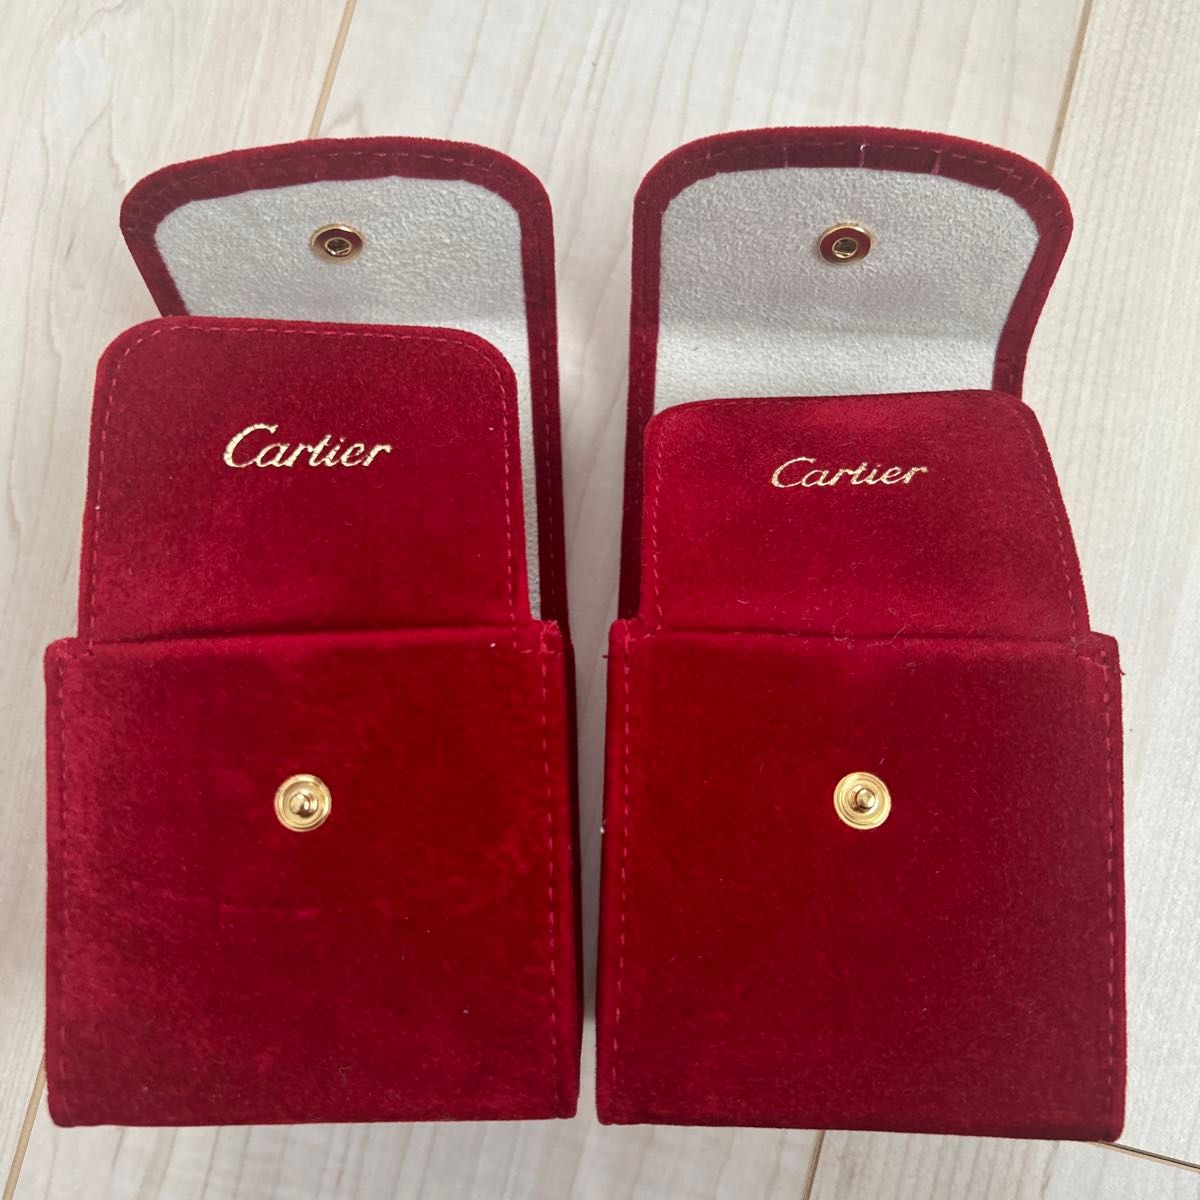 Cartierカルティエ時計ケース2個組み